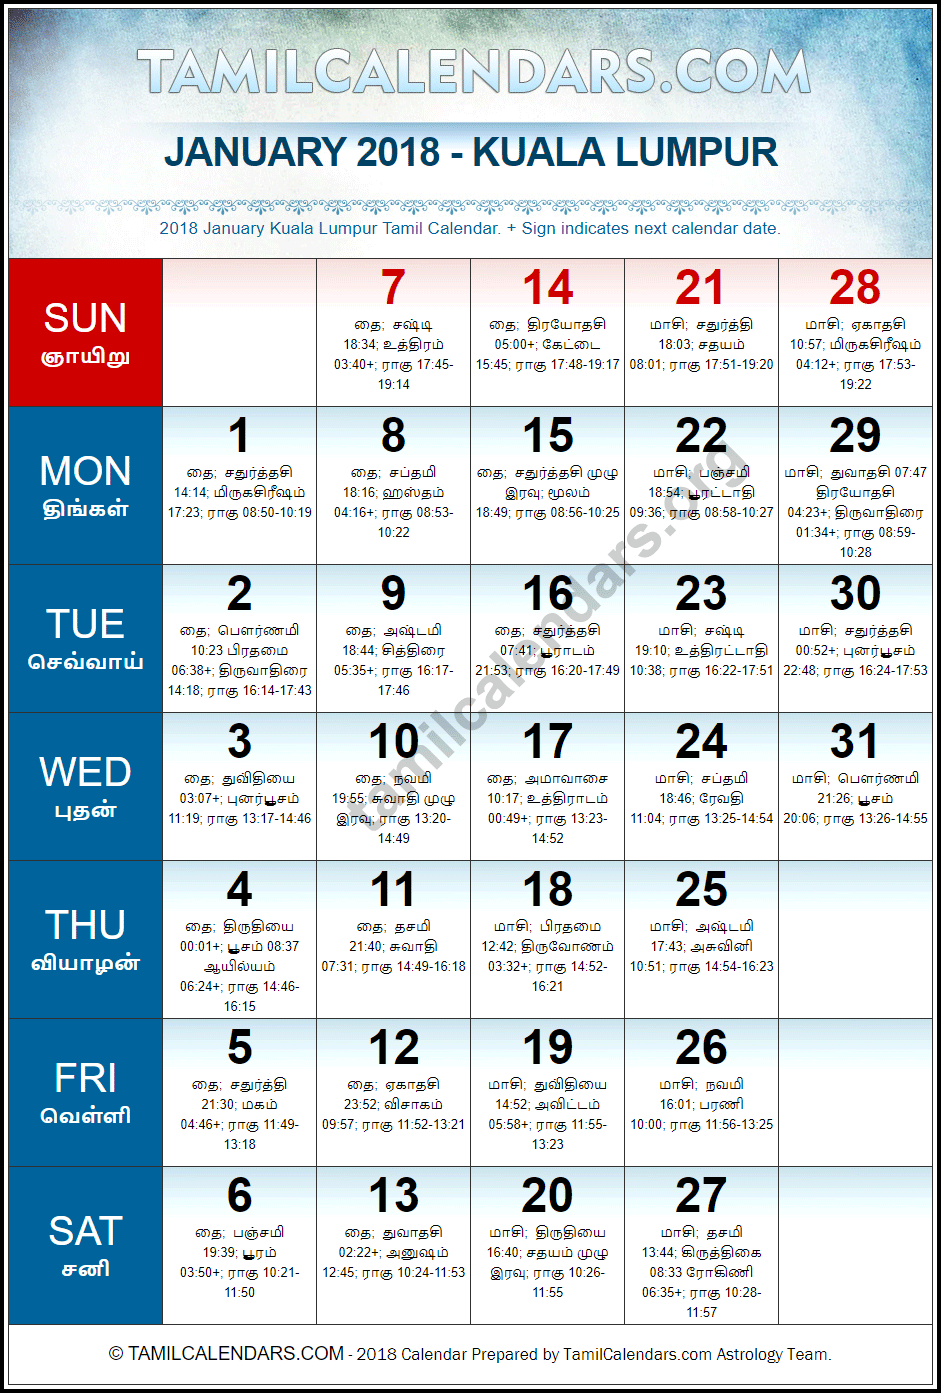 January 2018 Tamil Calendar for Malaysia (Kuala Lumpur)